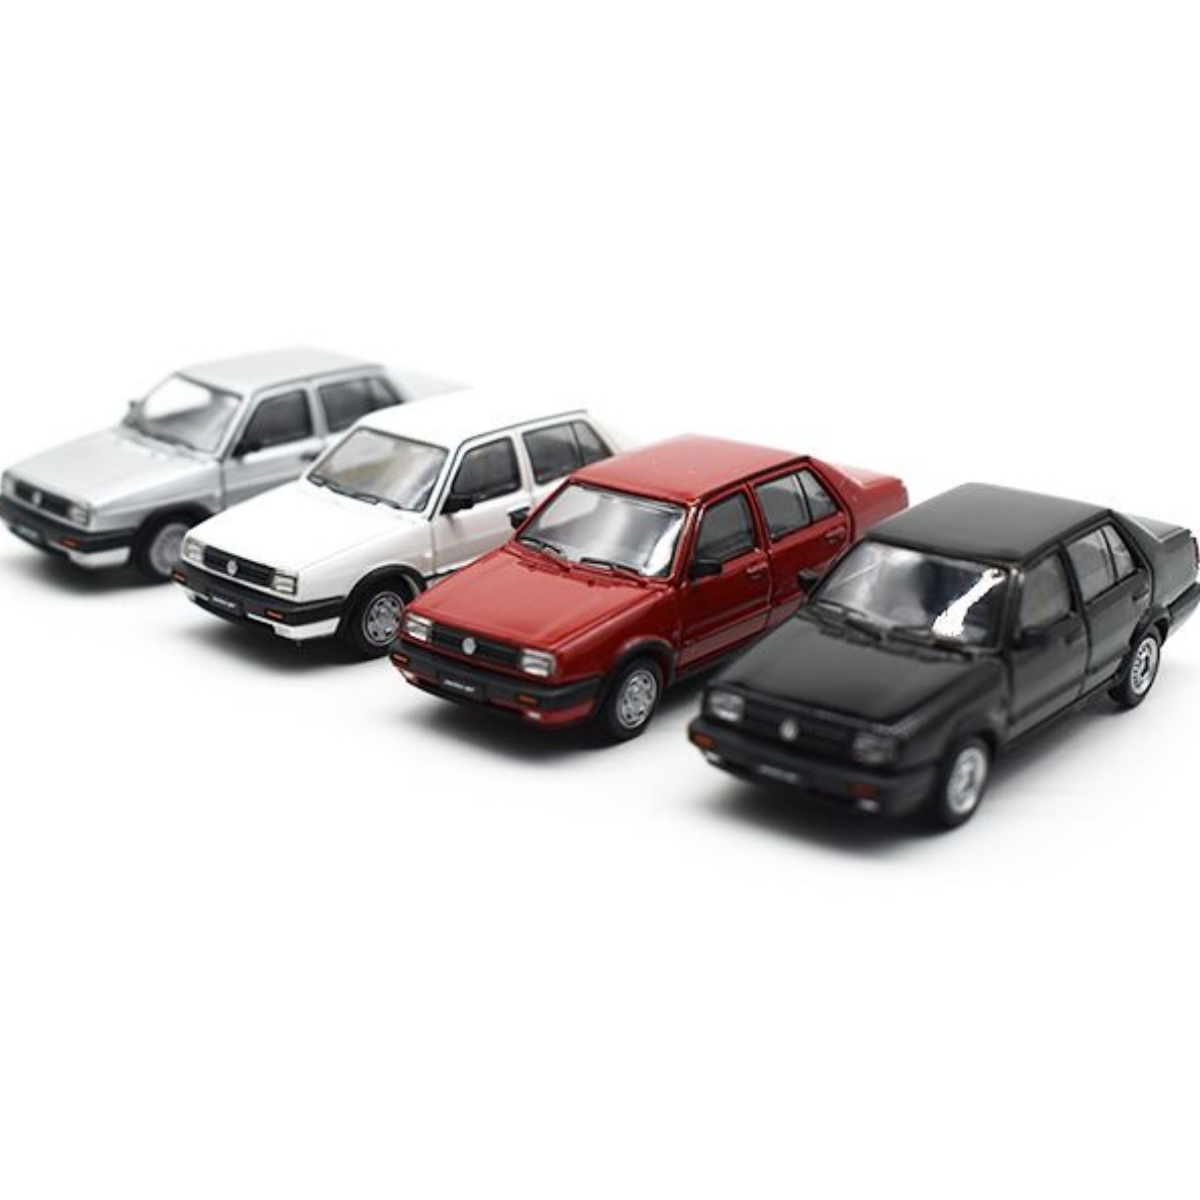 1/87 MC 捷达老款 黑、白、红、银色 、塑胶车模汽车模型摆件收藏